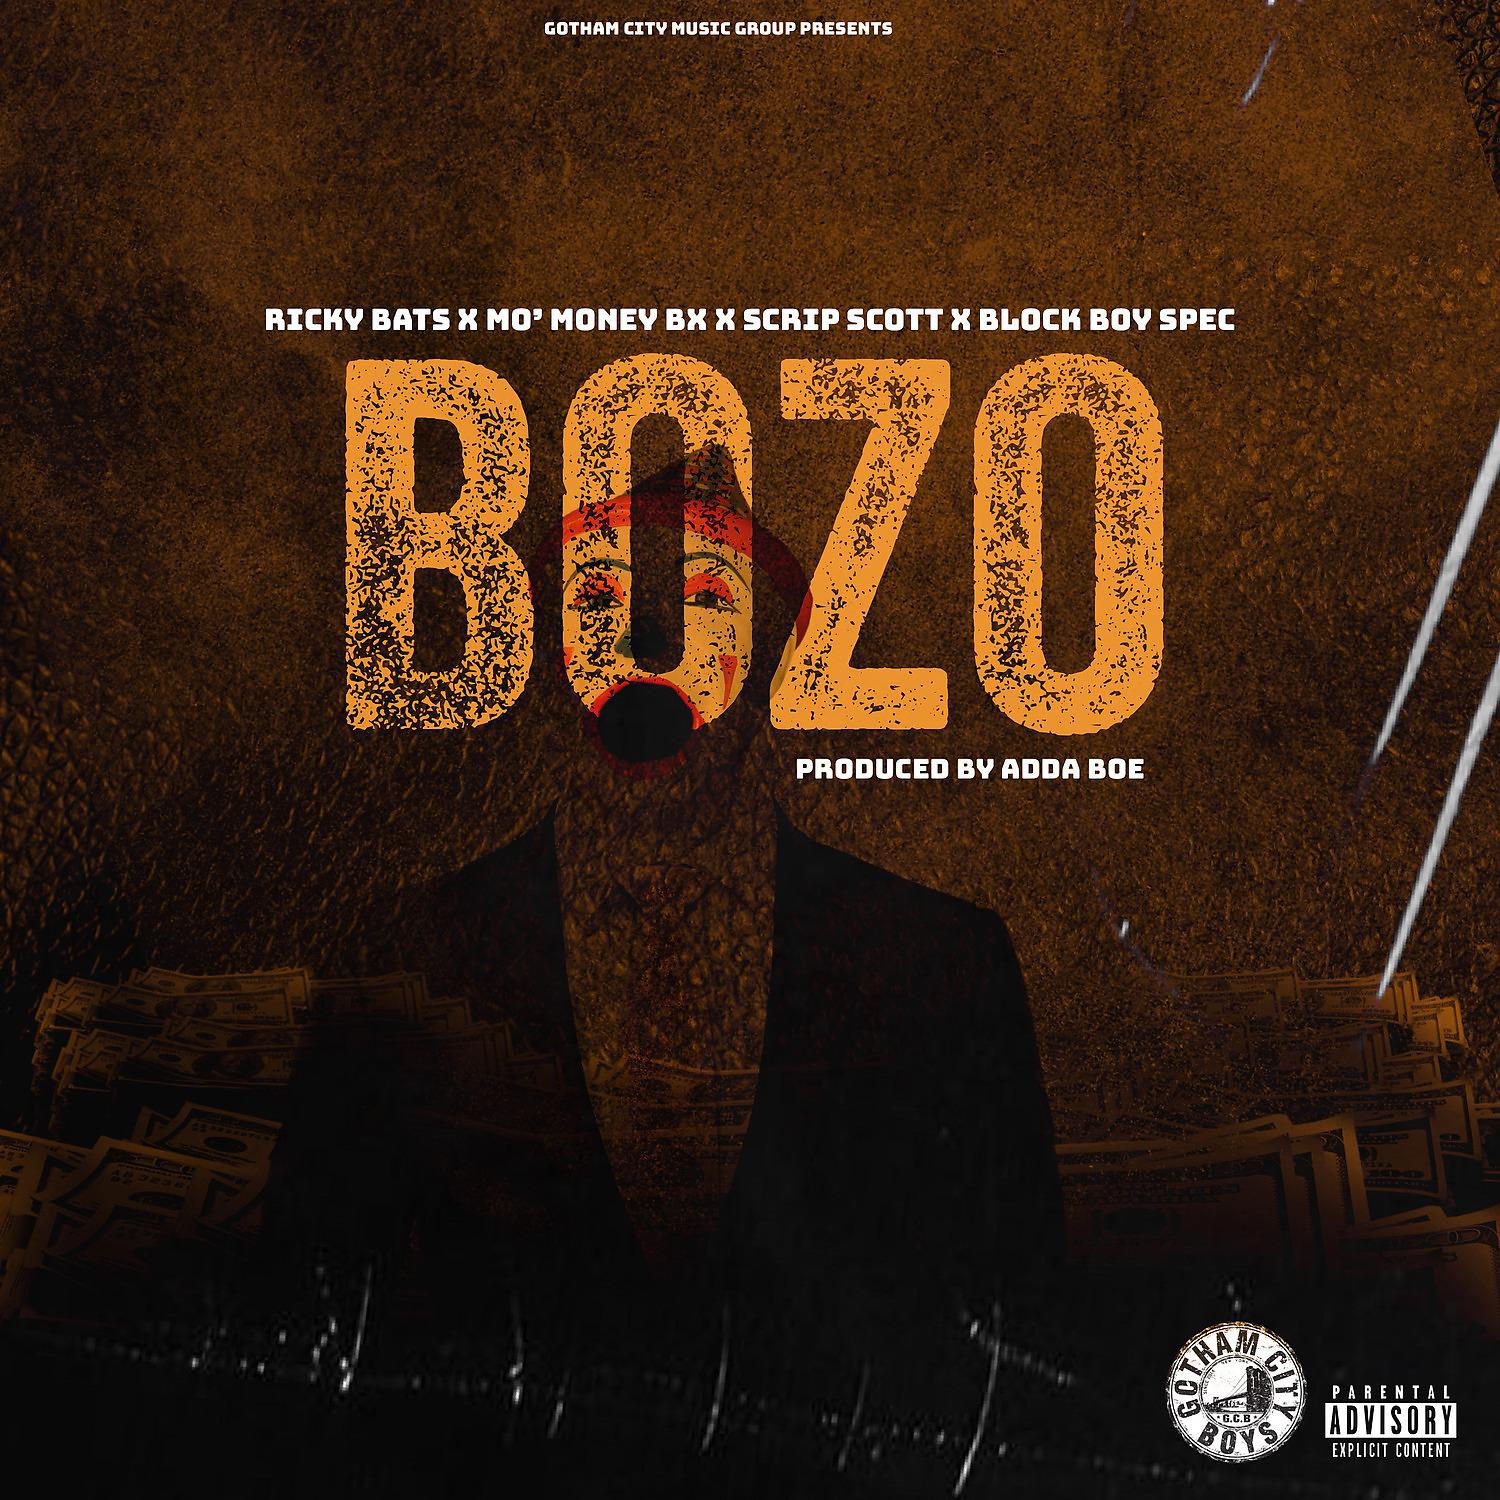 Постер альбома Bozo